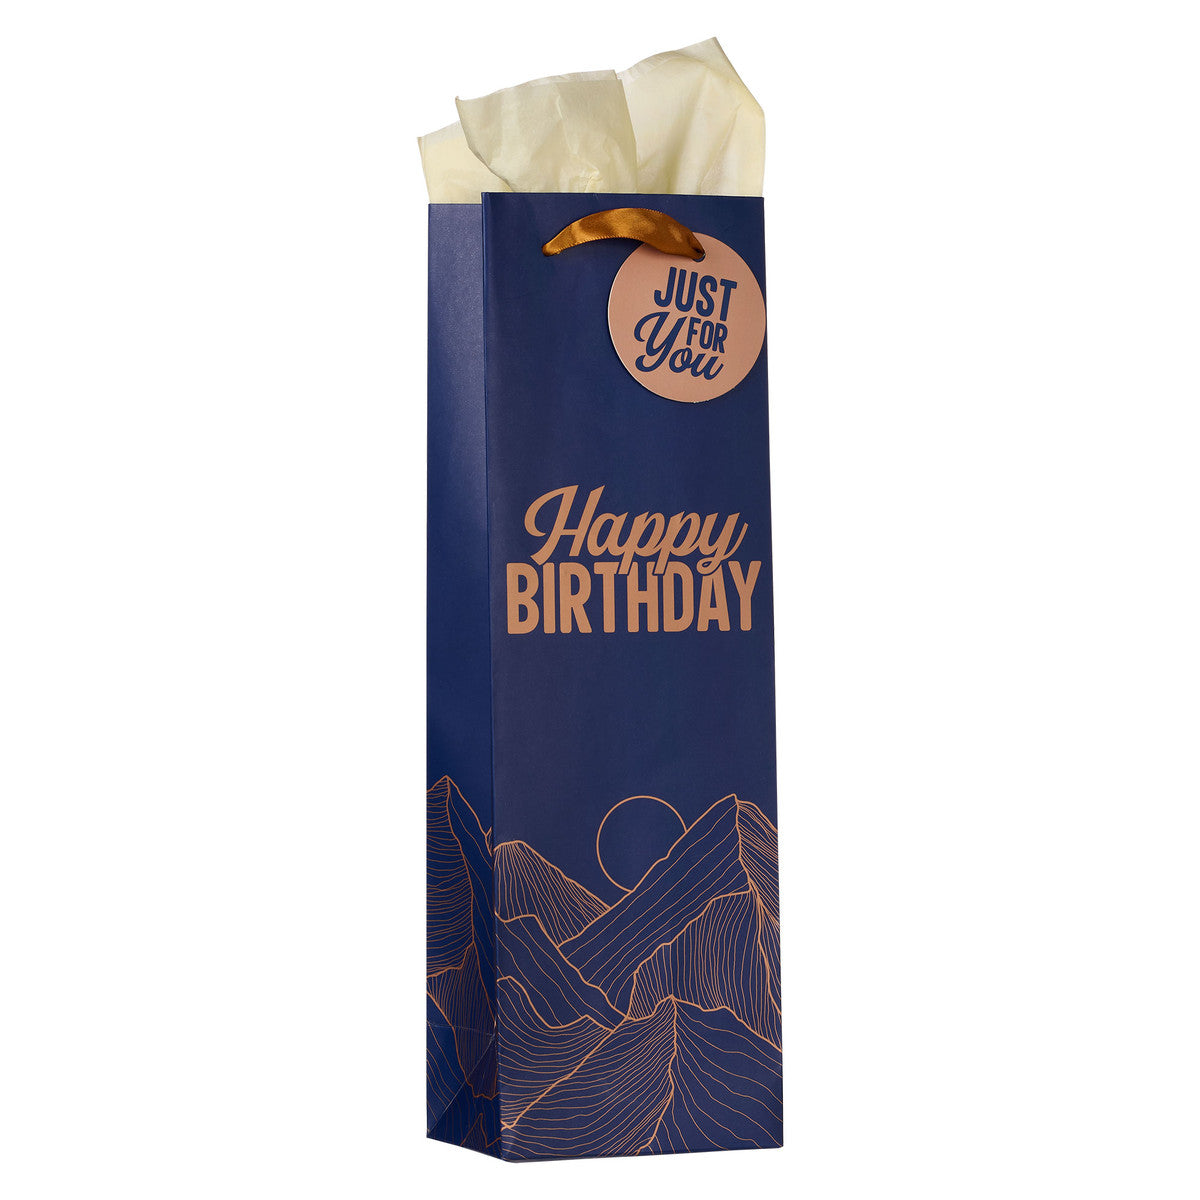 Happy Birthday Blue Sunset Bottle Gift Bag - The Christian Gift Company